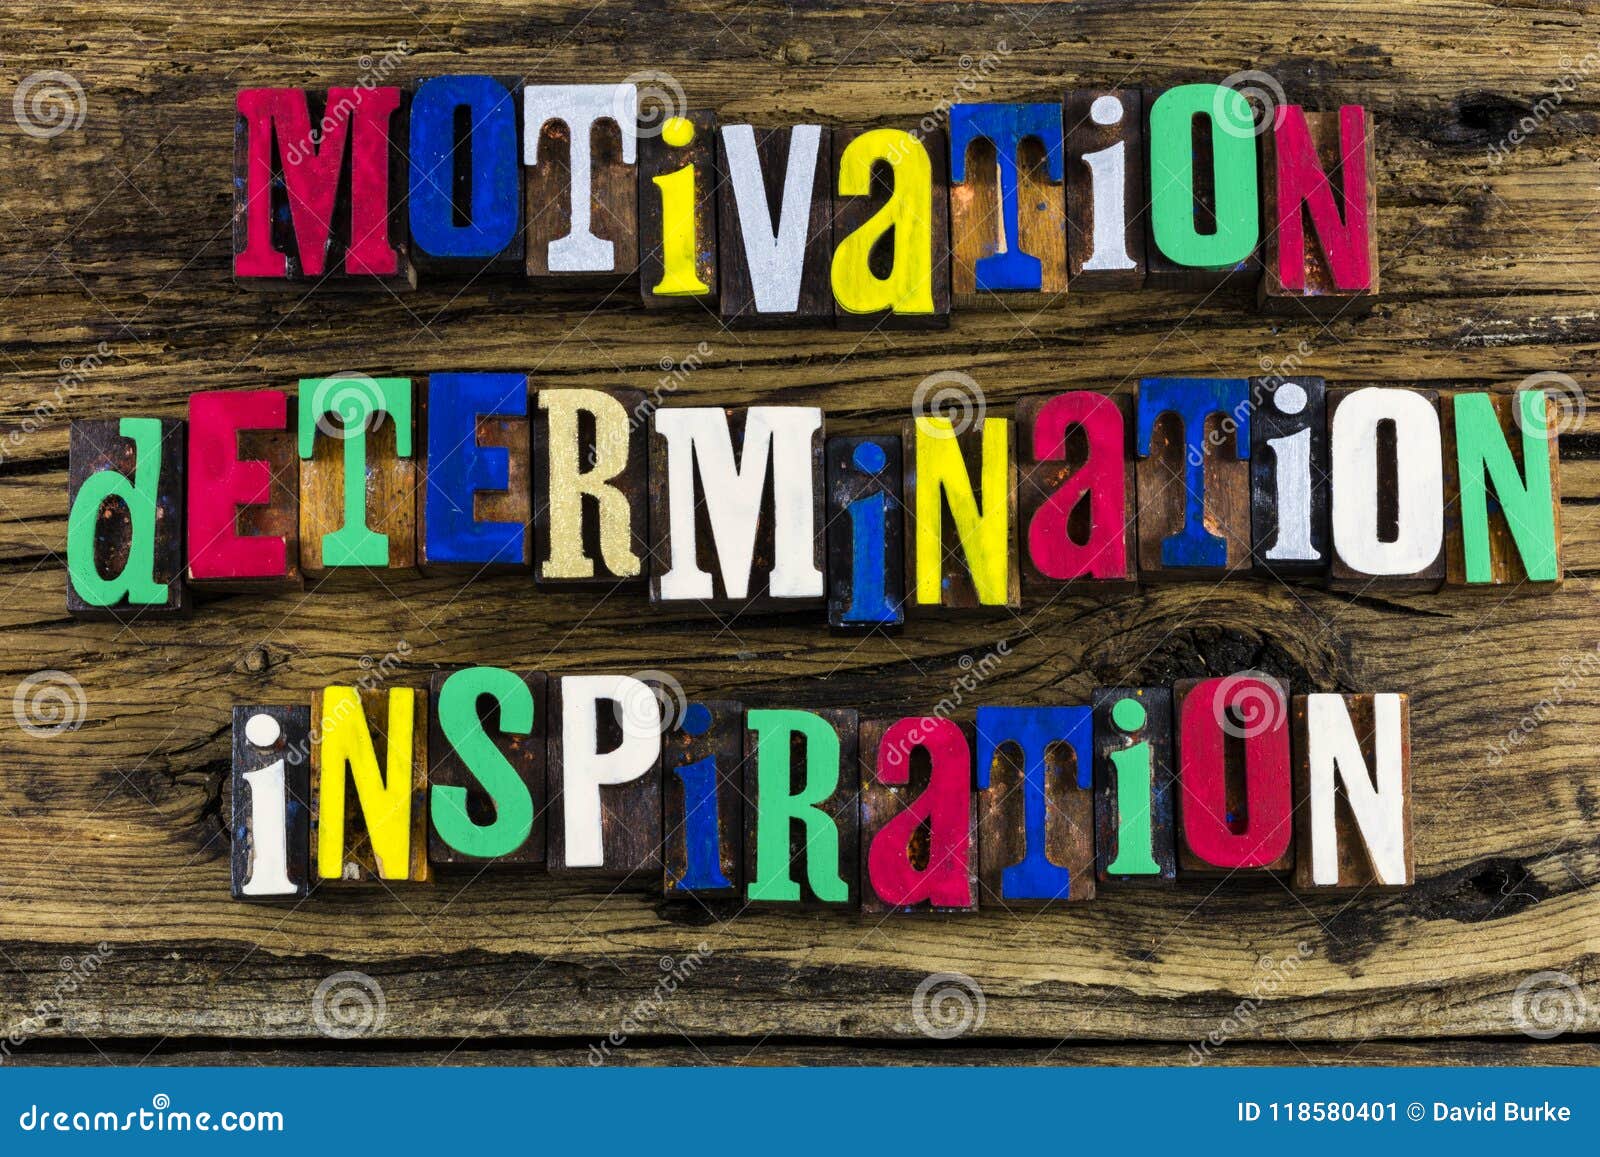 Motivation Determination Inspiration Quote Stock Image Image Of